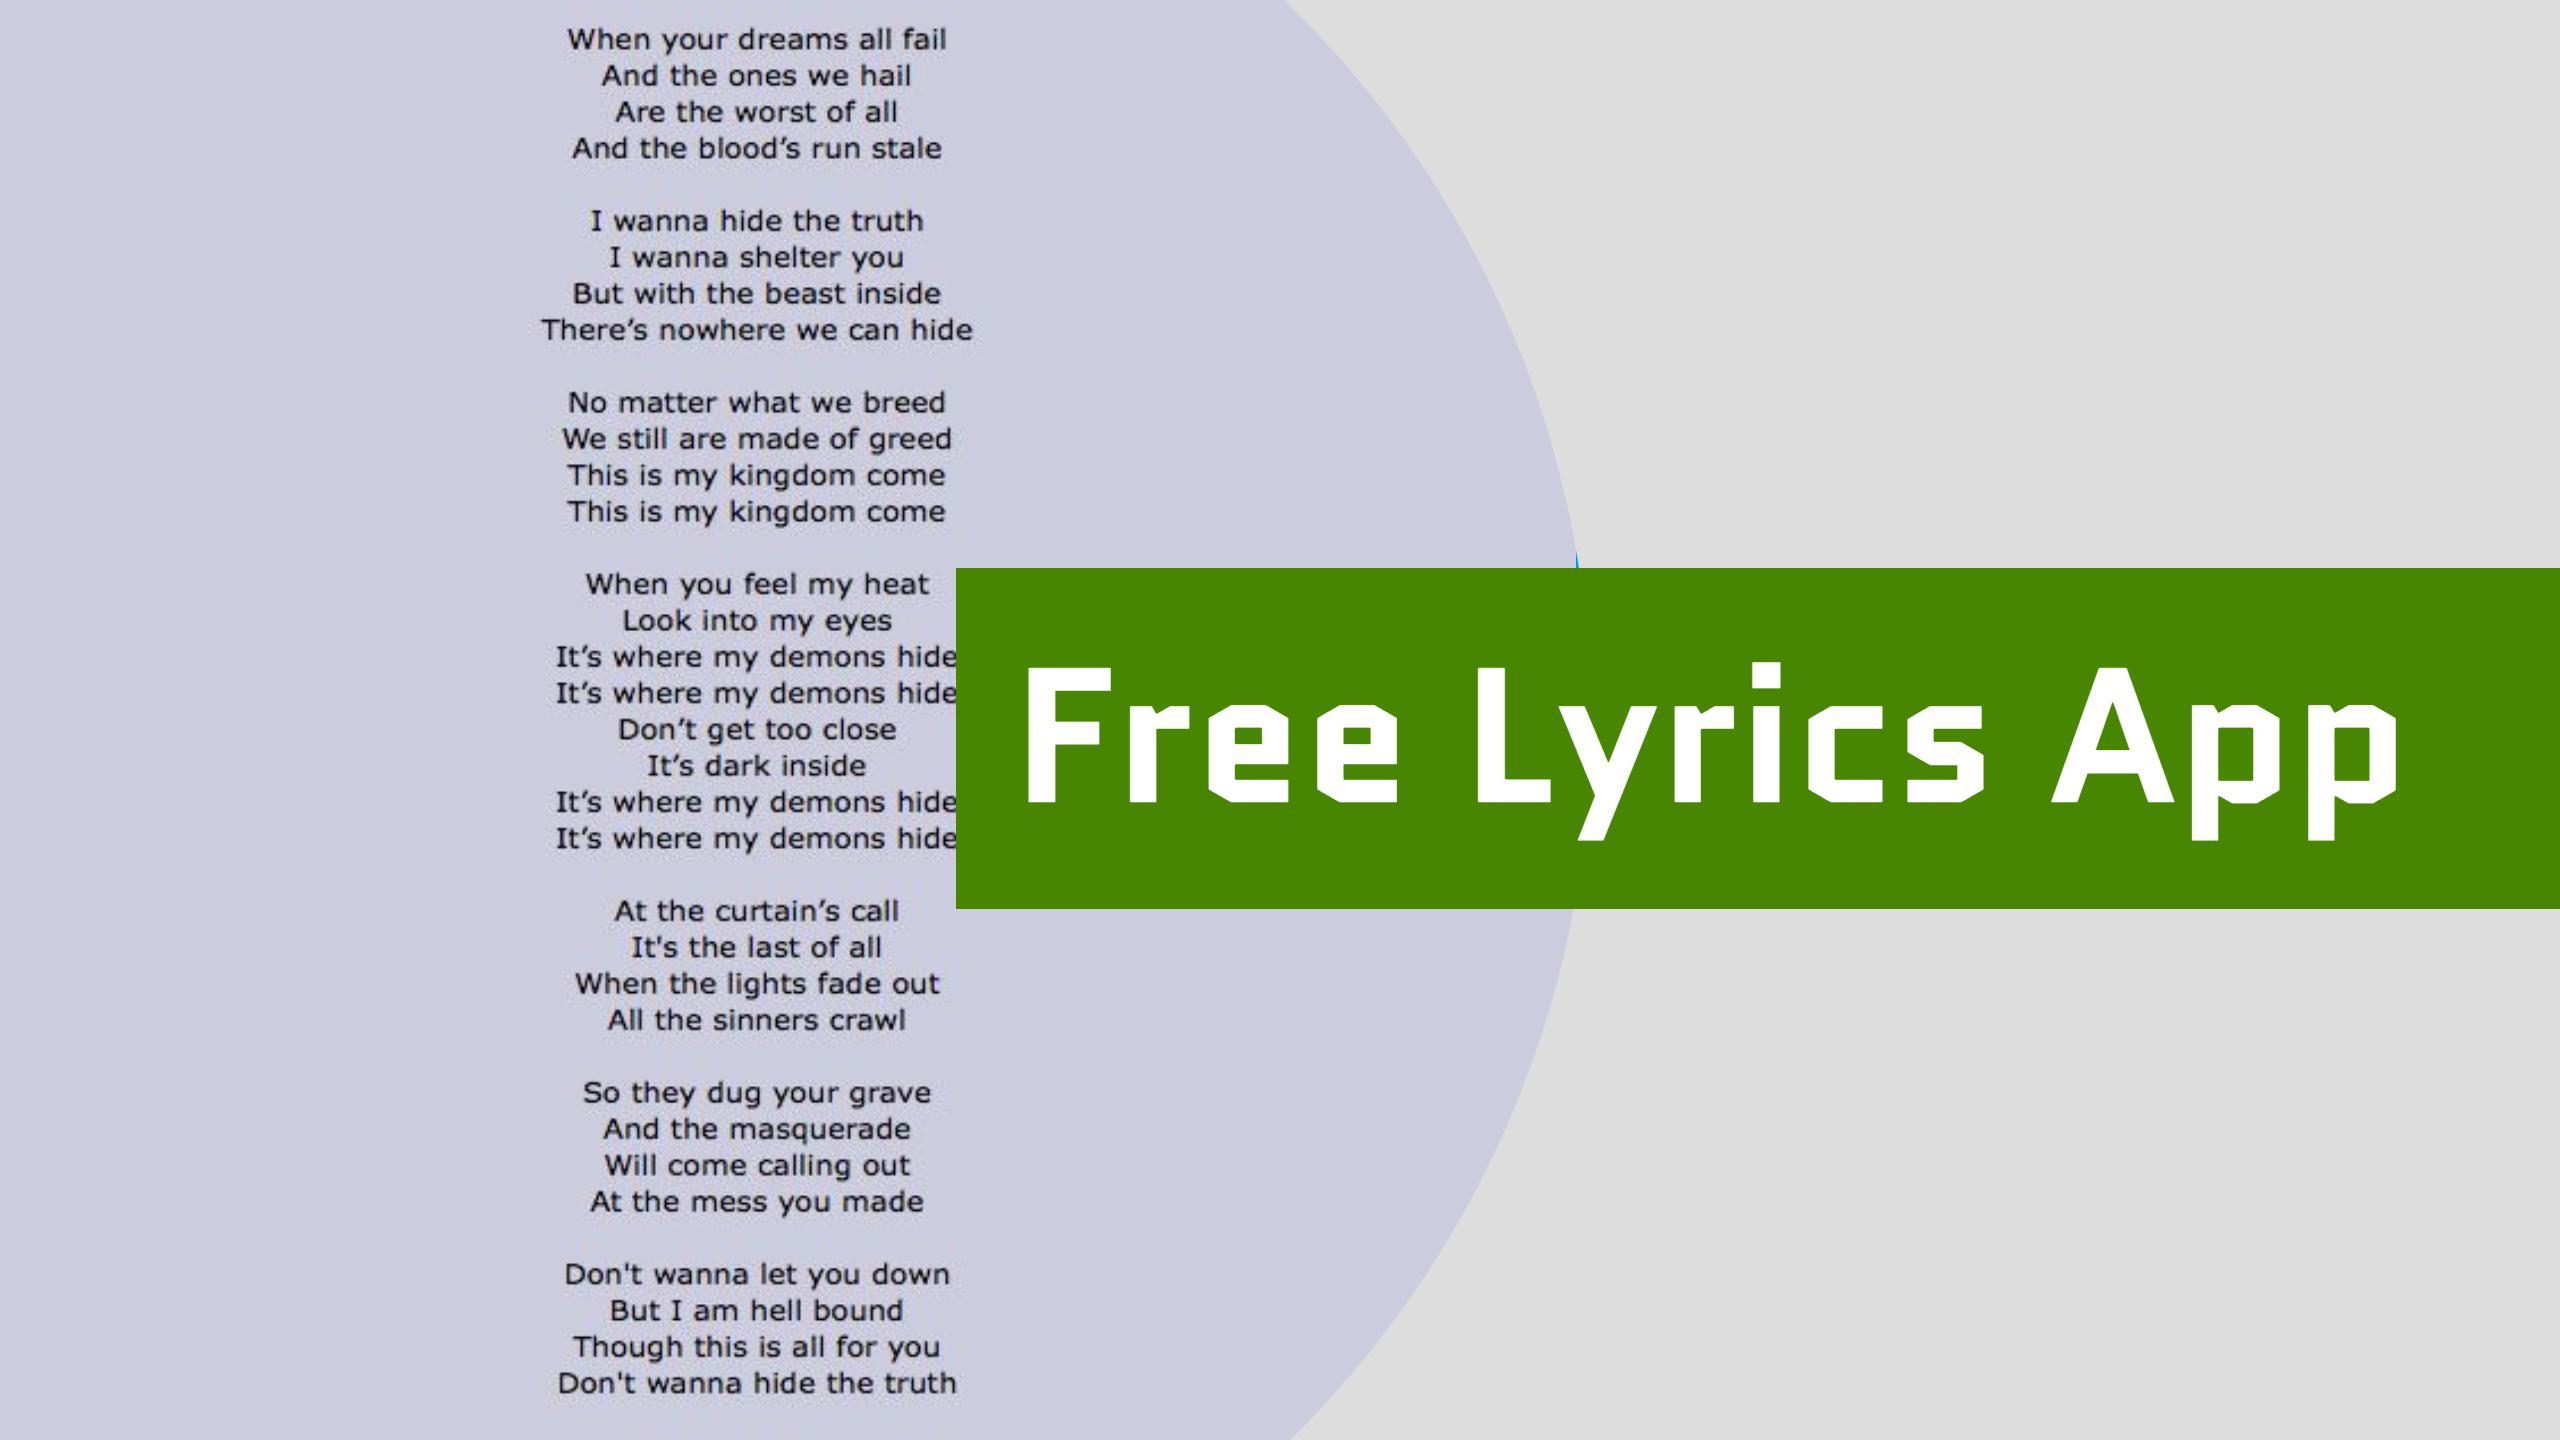 Free Lyrics App - songs by lyrics - All in One에 대한 설명.